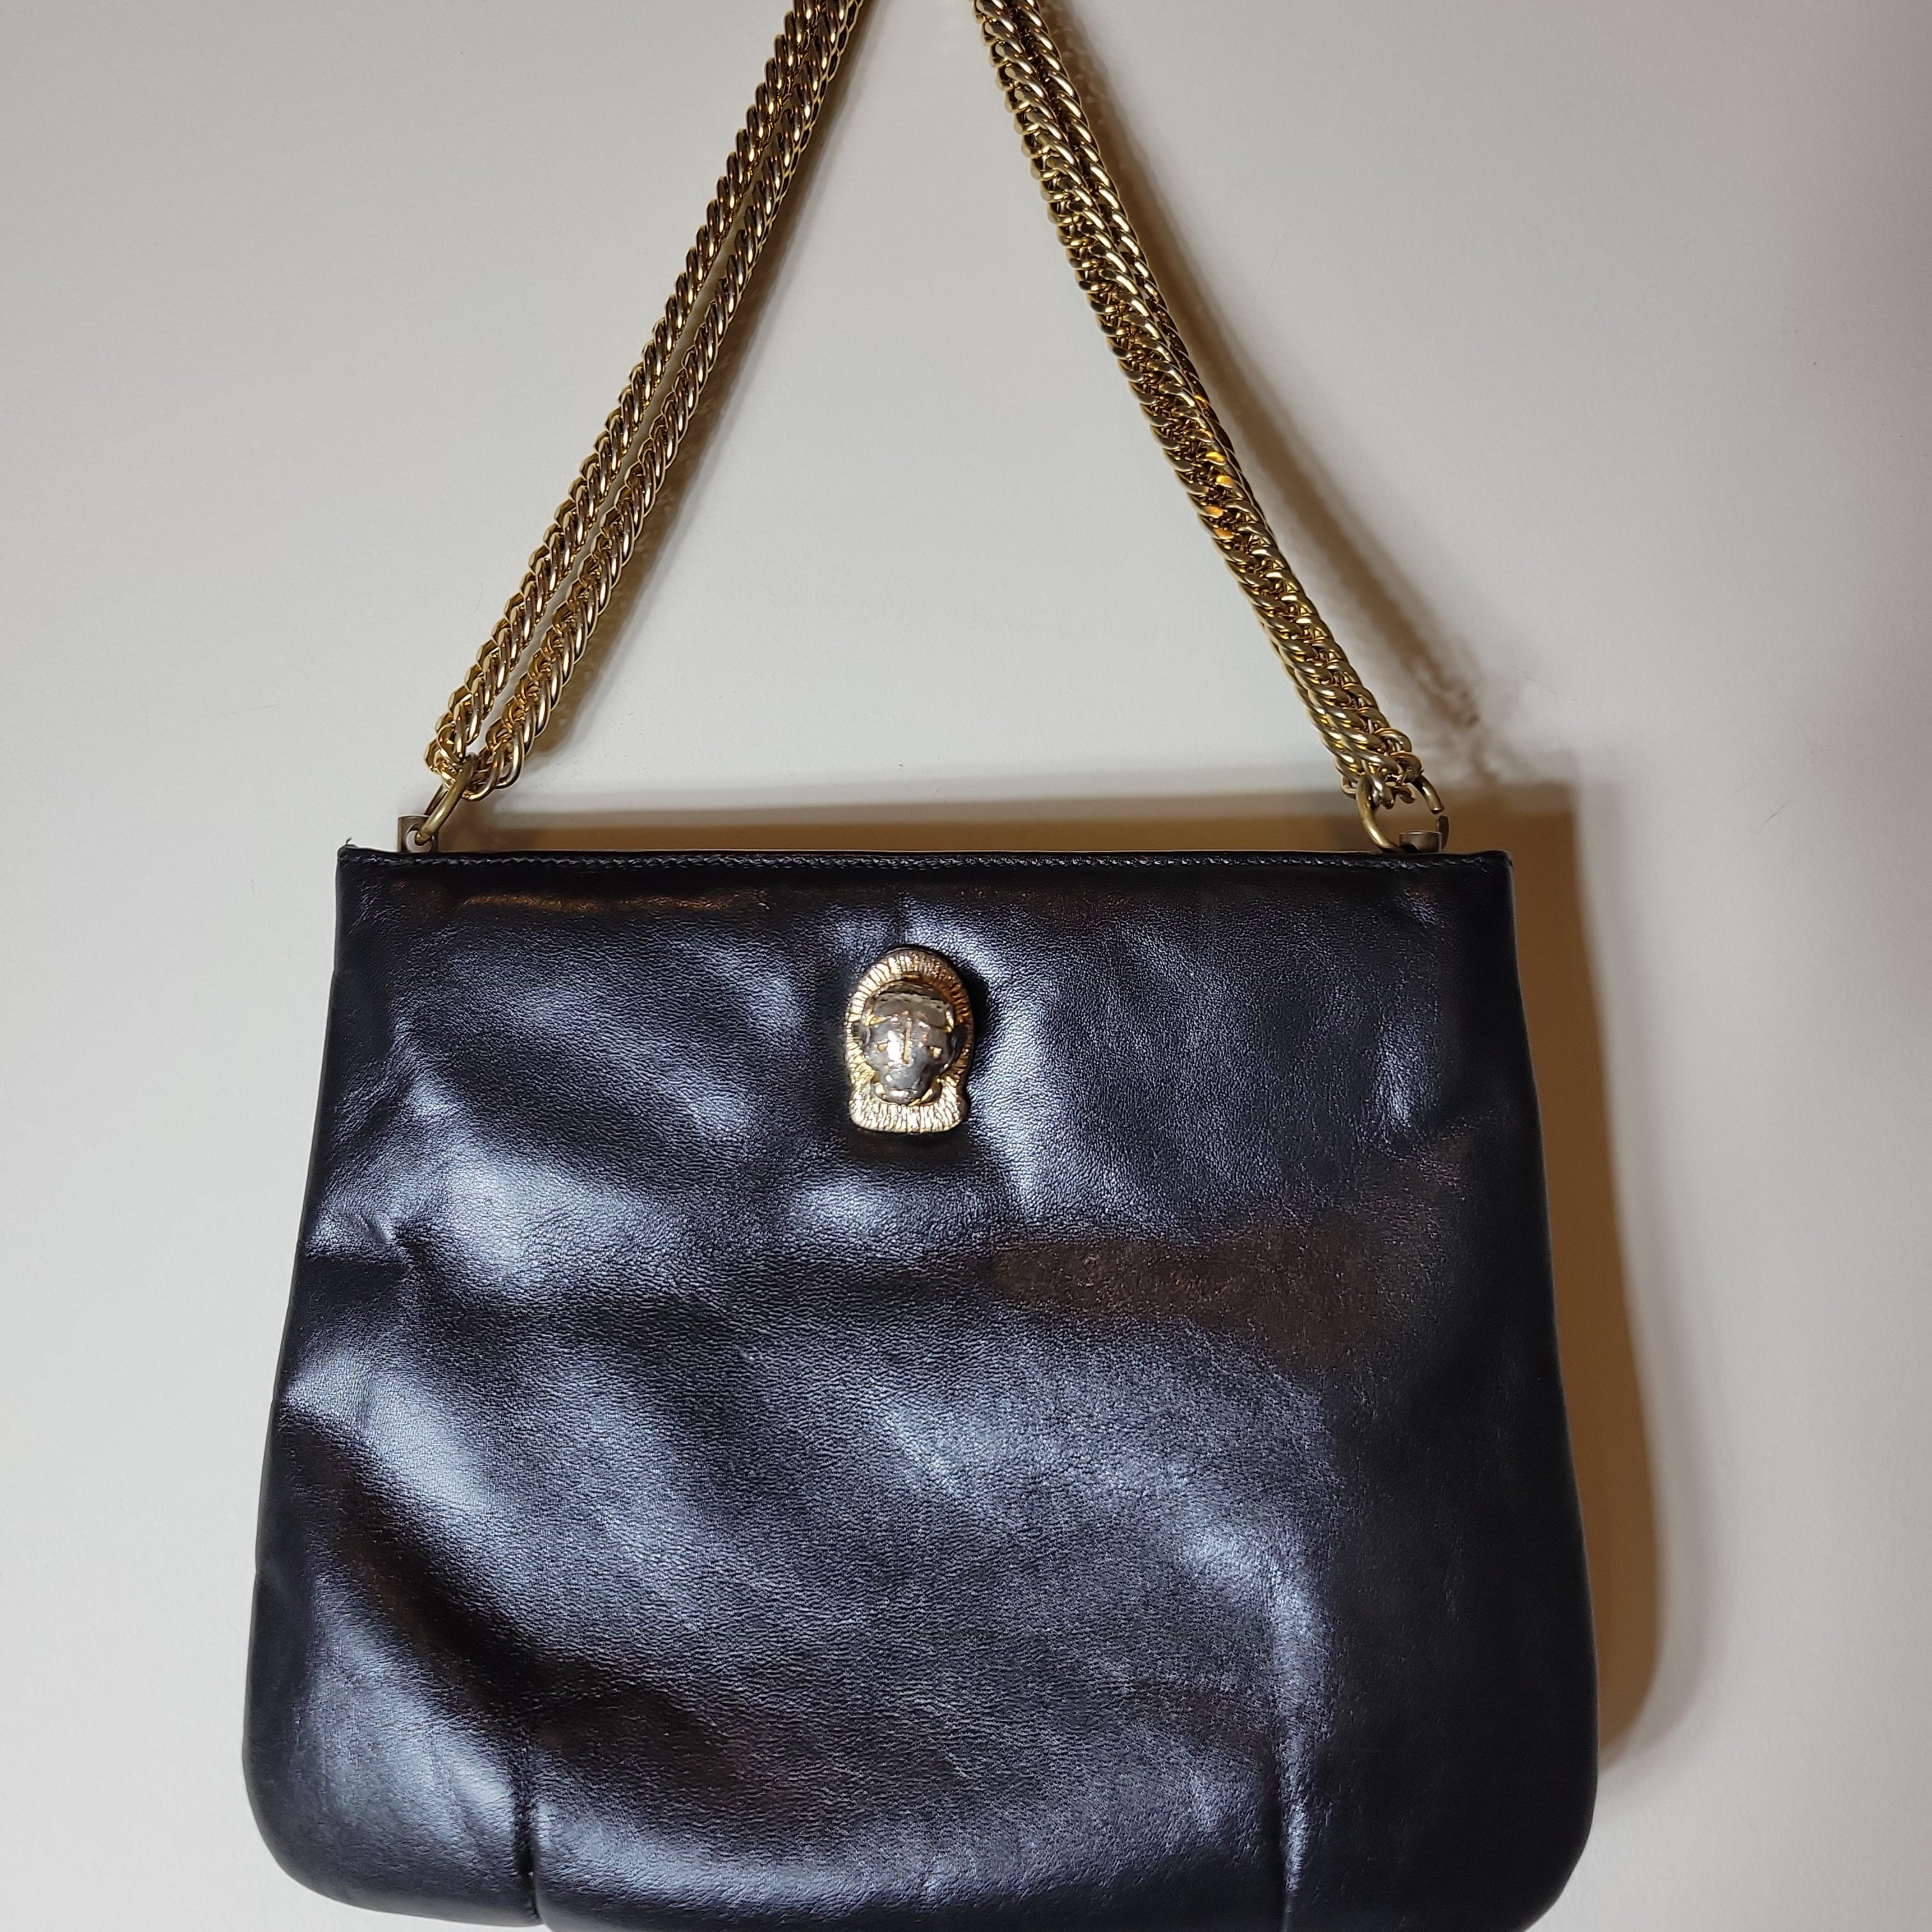 Luxury European Style Lion Leather Handbag | Leather handbag brands, Leather  handbags, Handbag boutique